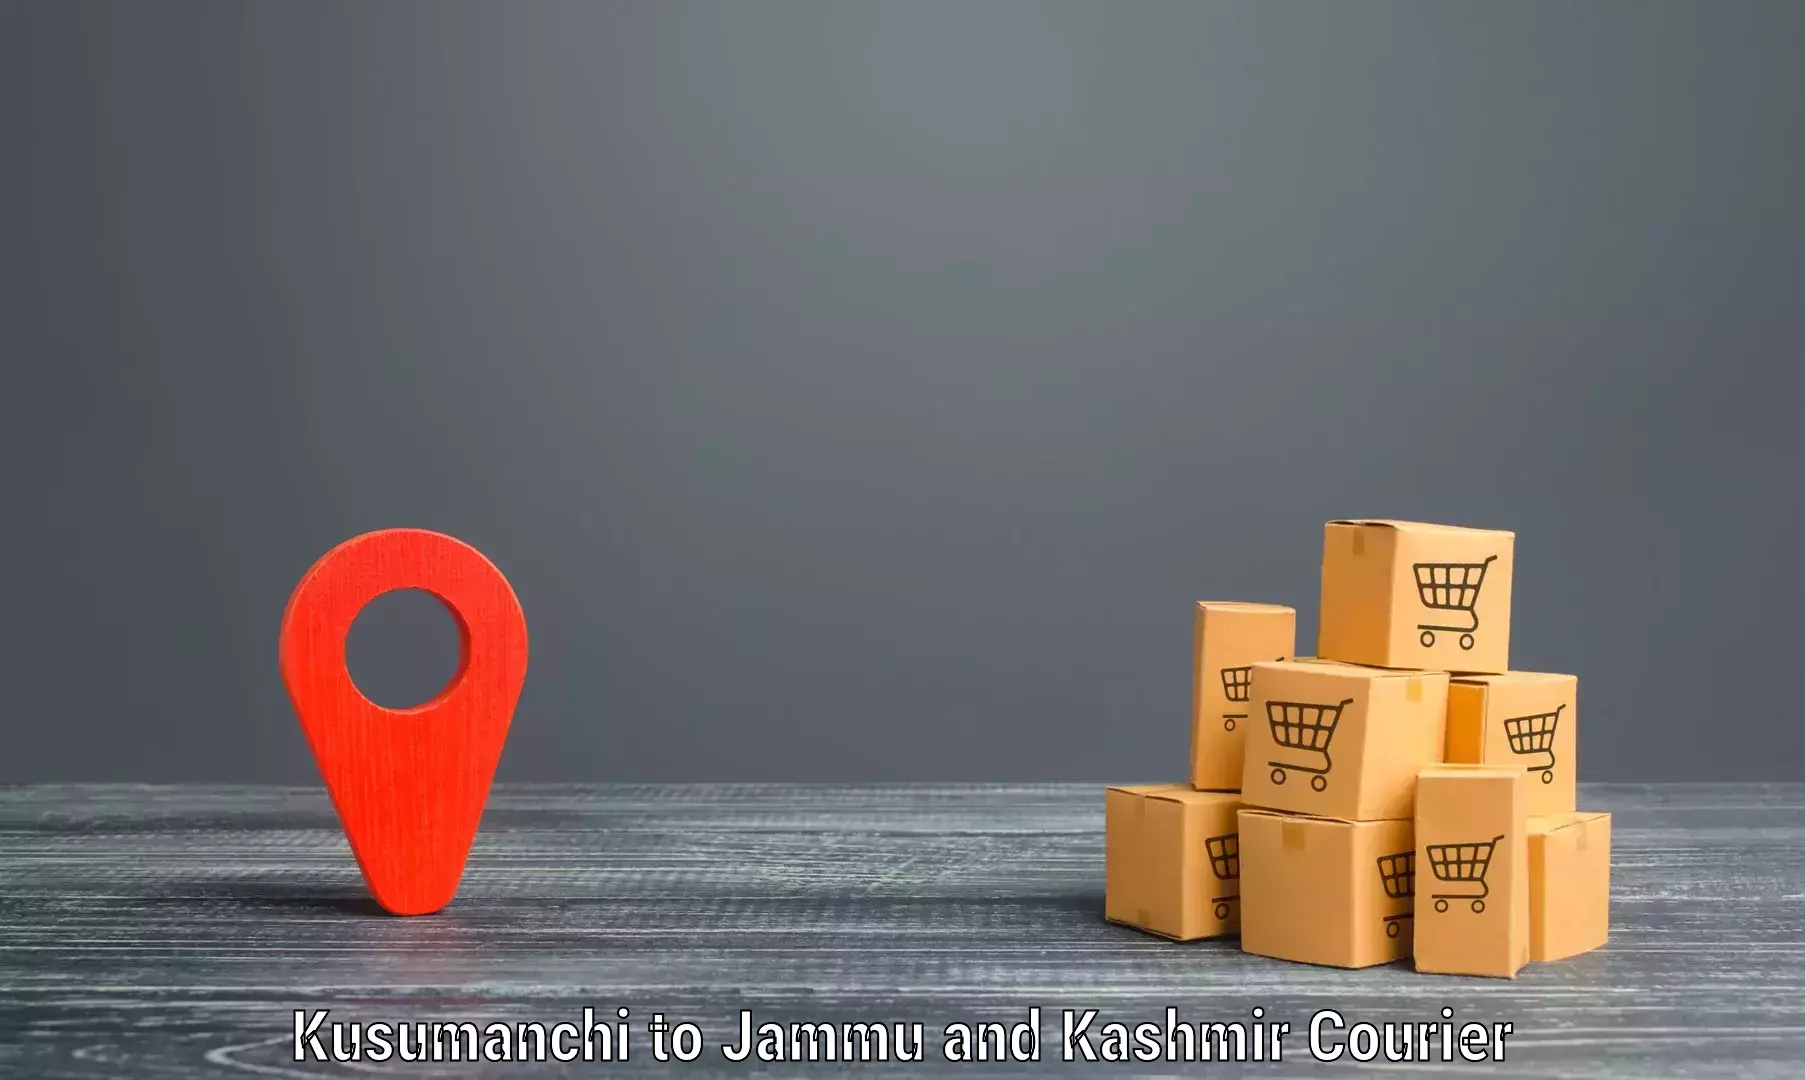 Cost-effective freight solutions Kusumanchi to Srinagar Kashmir